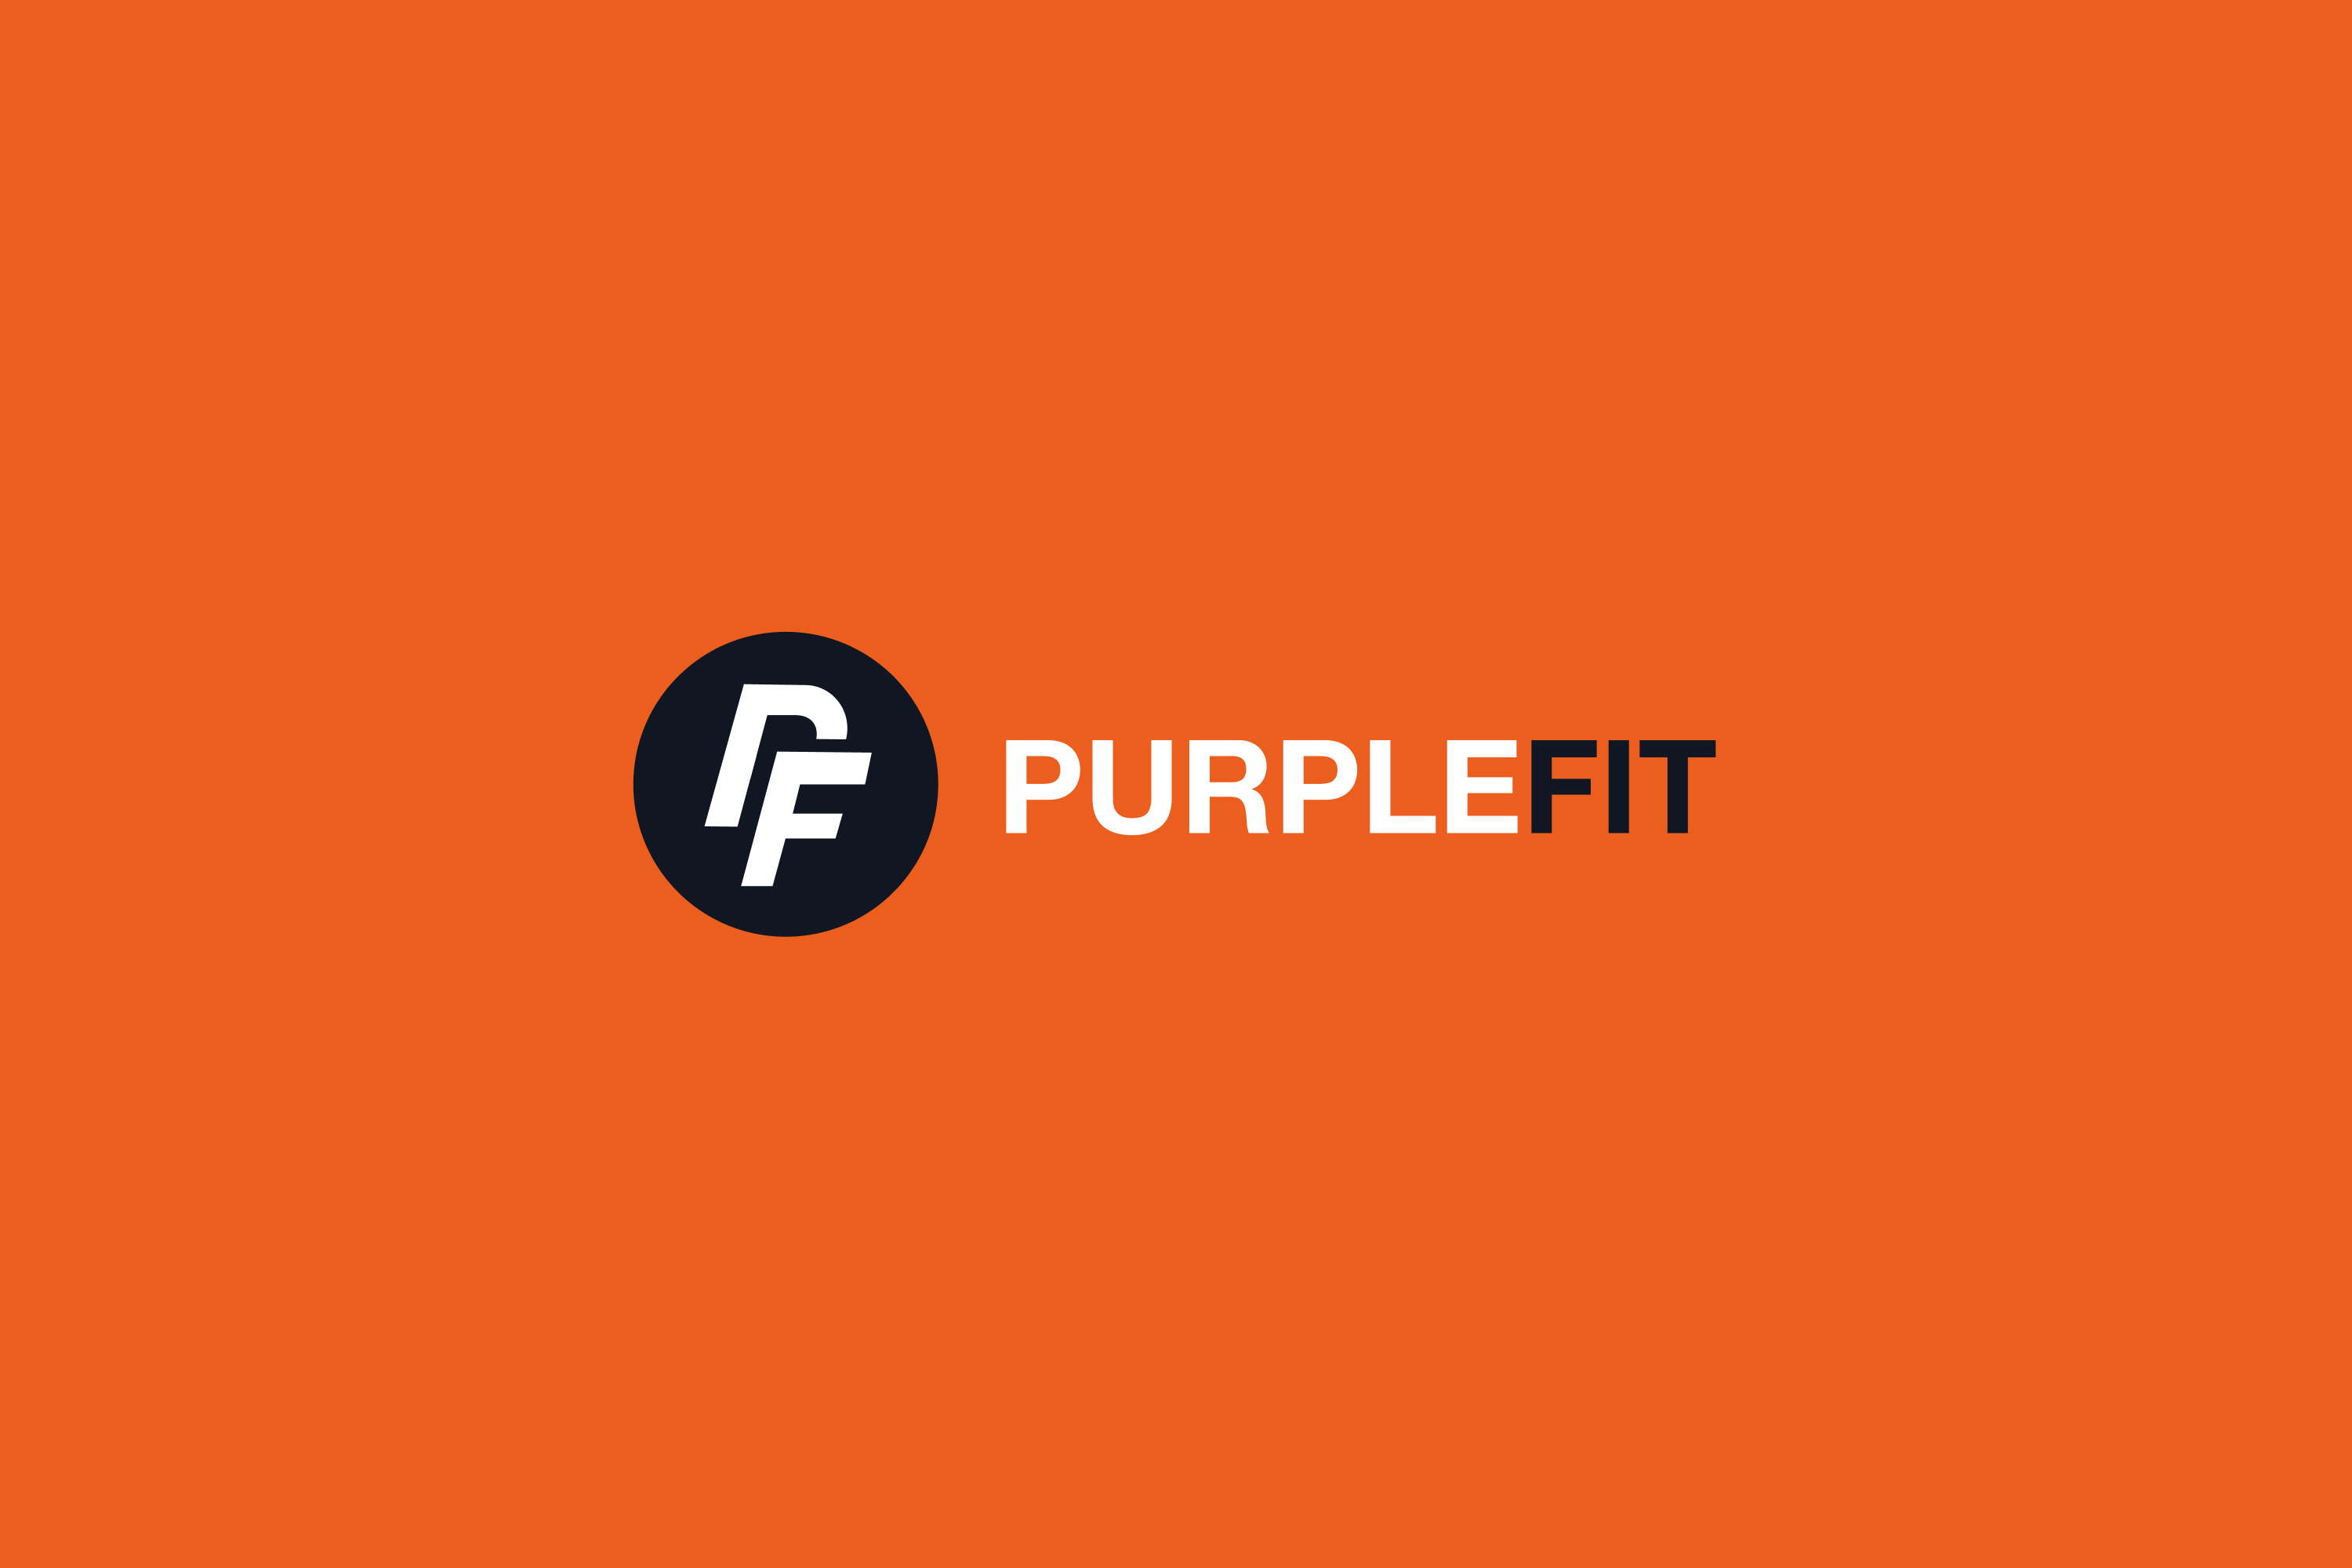 I nostri prodotti - PurpleSoft